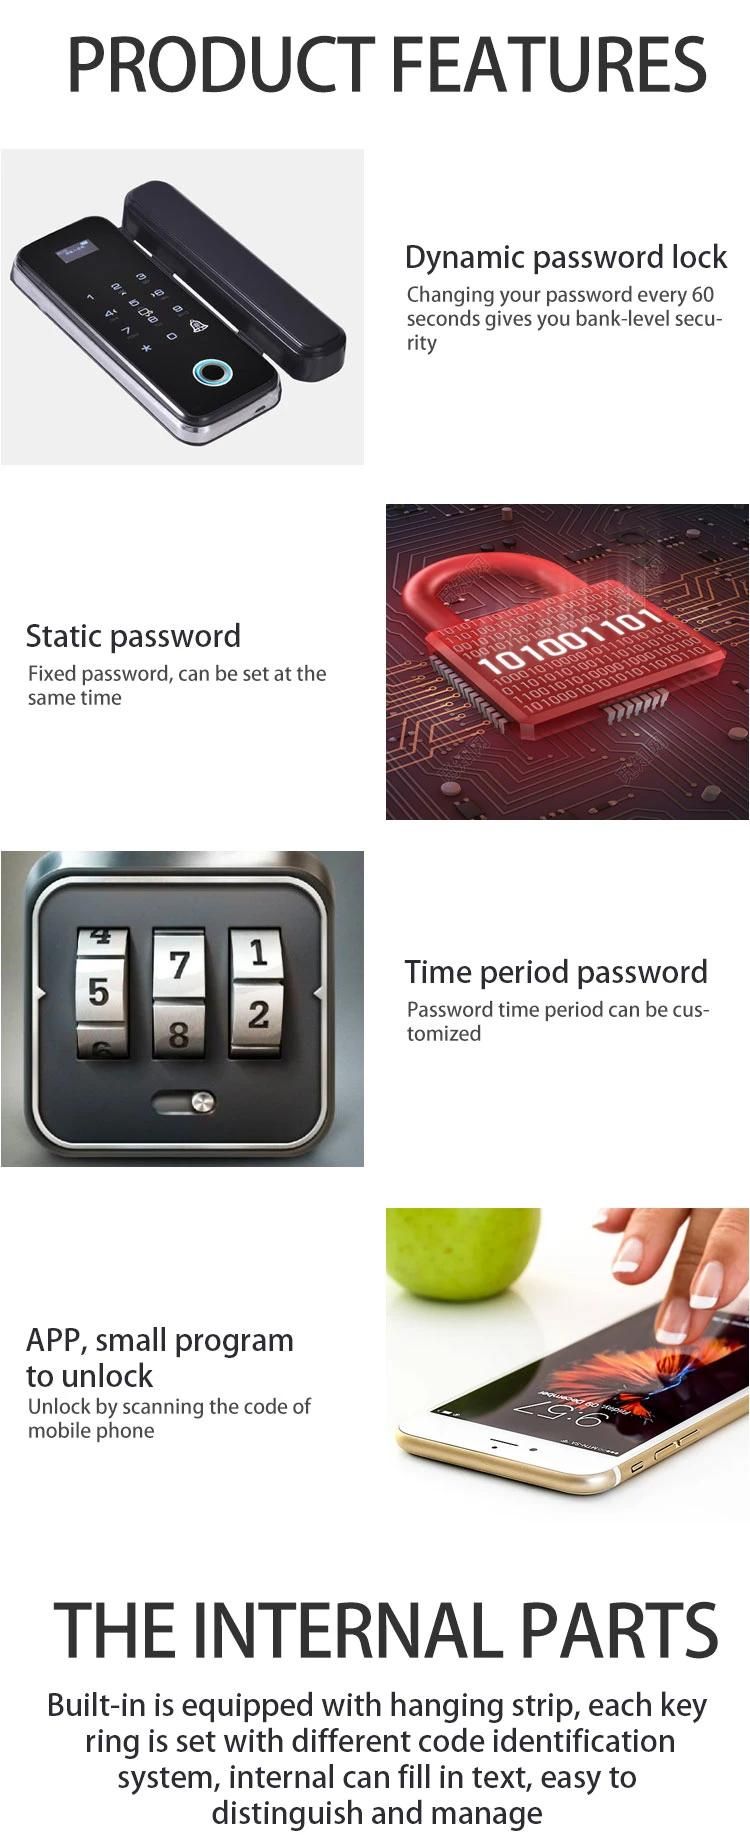 Hot Sale Smart Key Locker Intelligent Key Management Locker